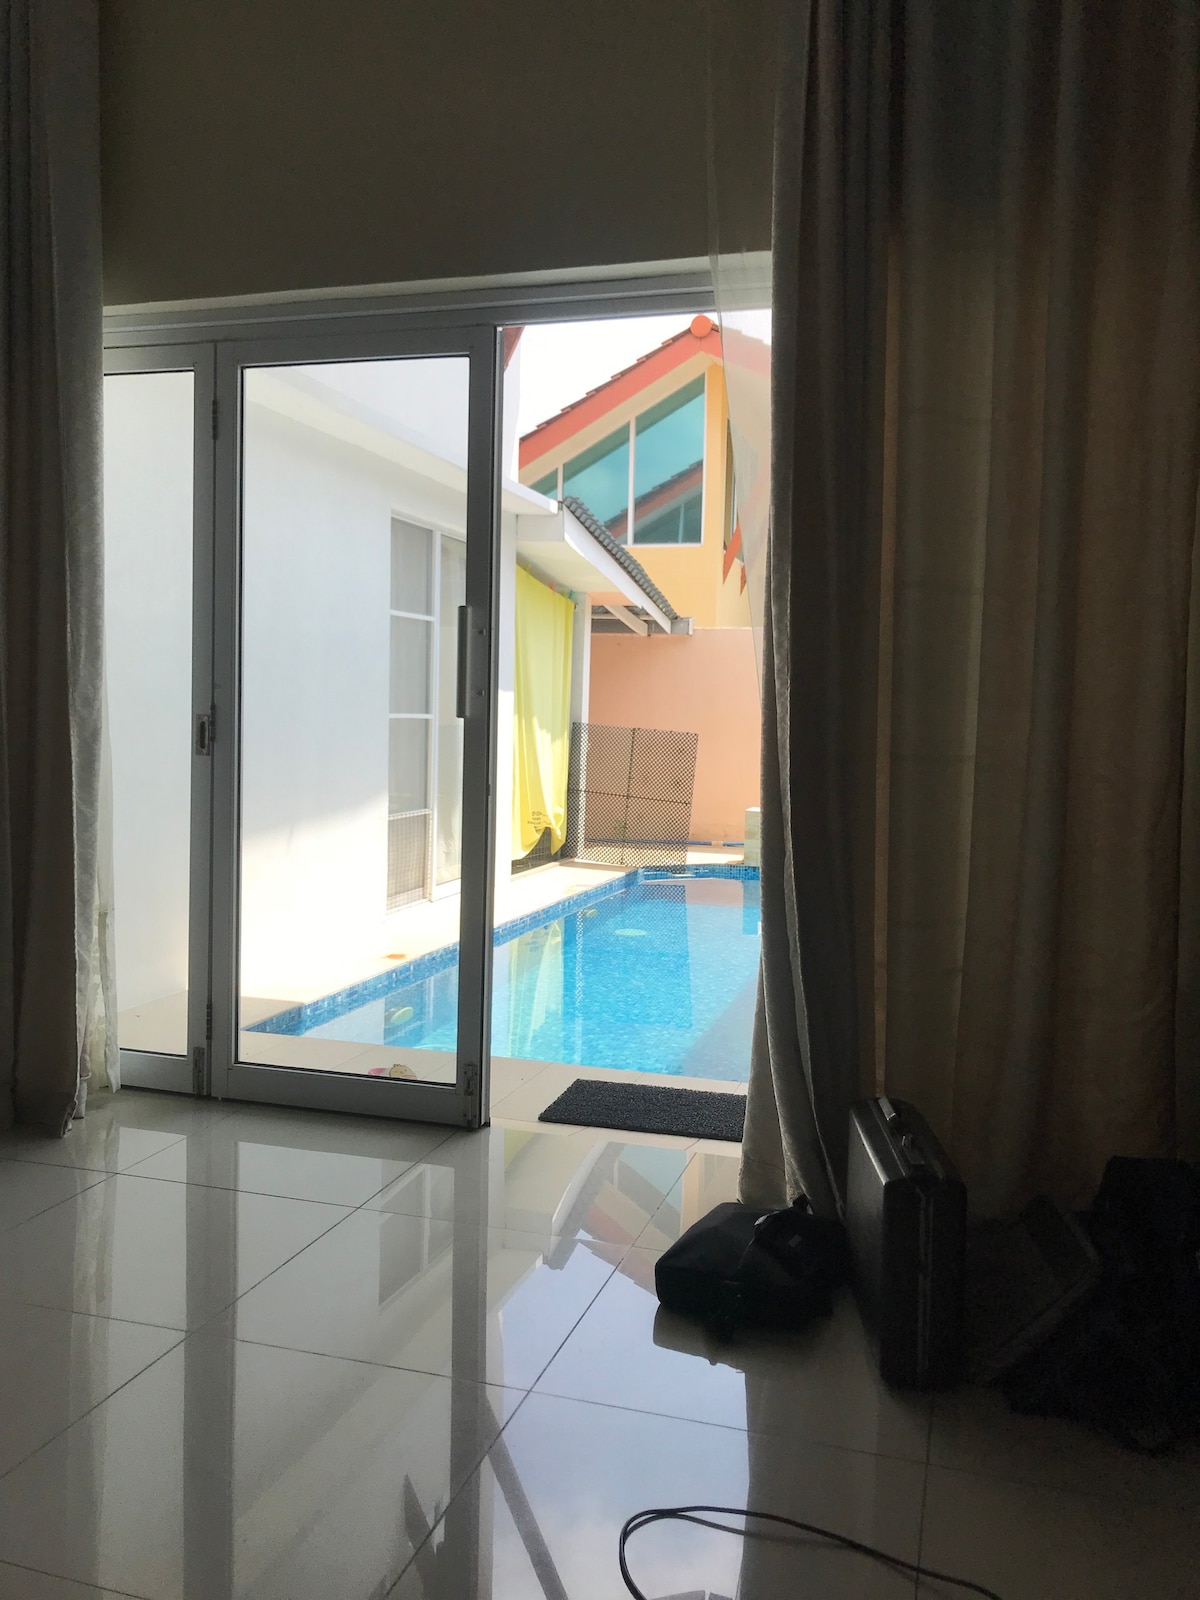 Luxury Seri Iskandar with a pool!